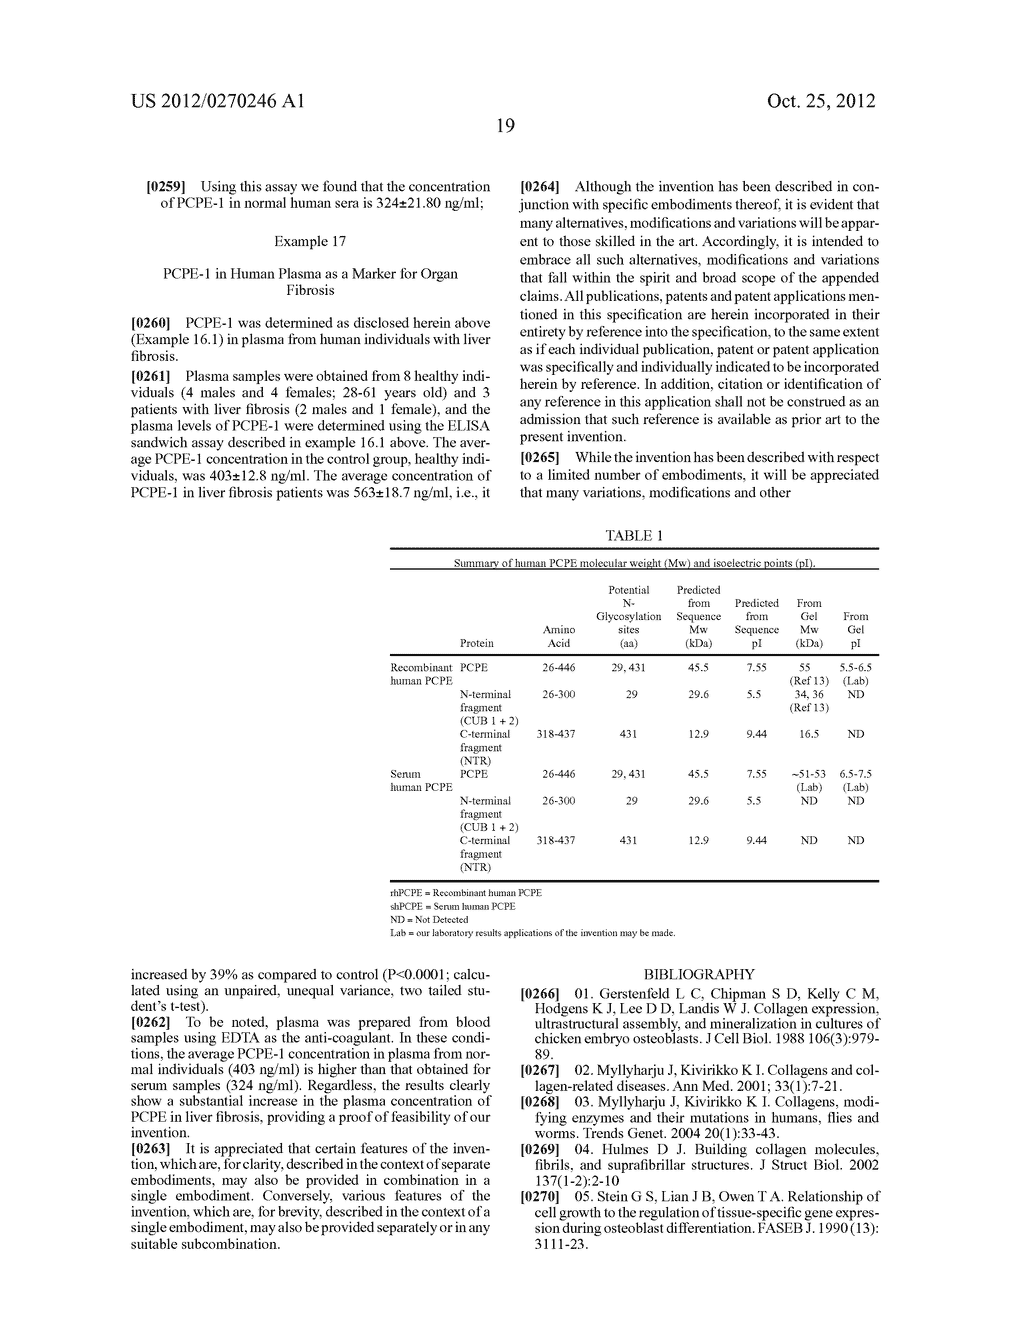 PROCOLLAGEN C-PROTEINASE ENHANCER (PCPE) BIOMARKER FOR BONE FORMATION - diagram, schematic, and image 41